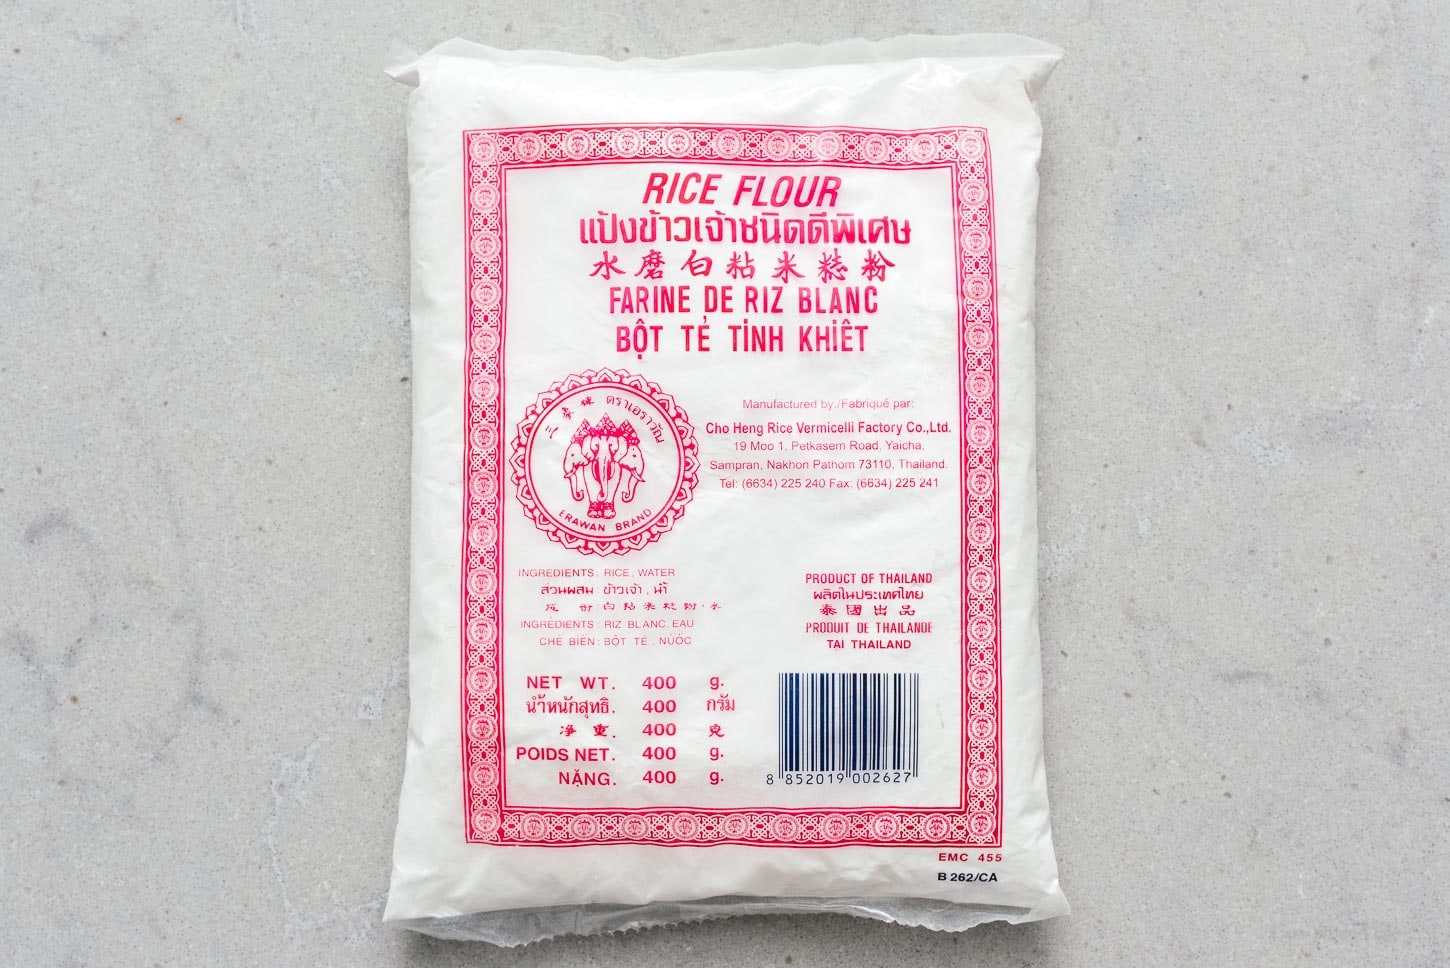 elephant brand rice flour | www.iamafoodblog.com